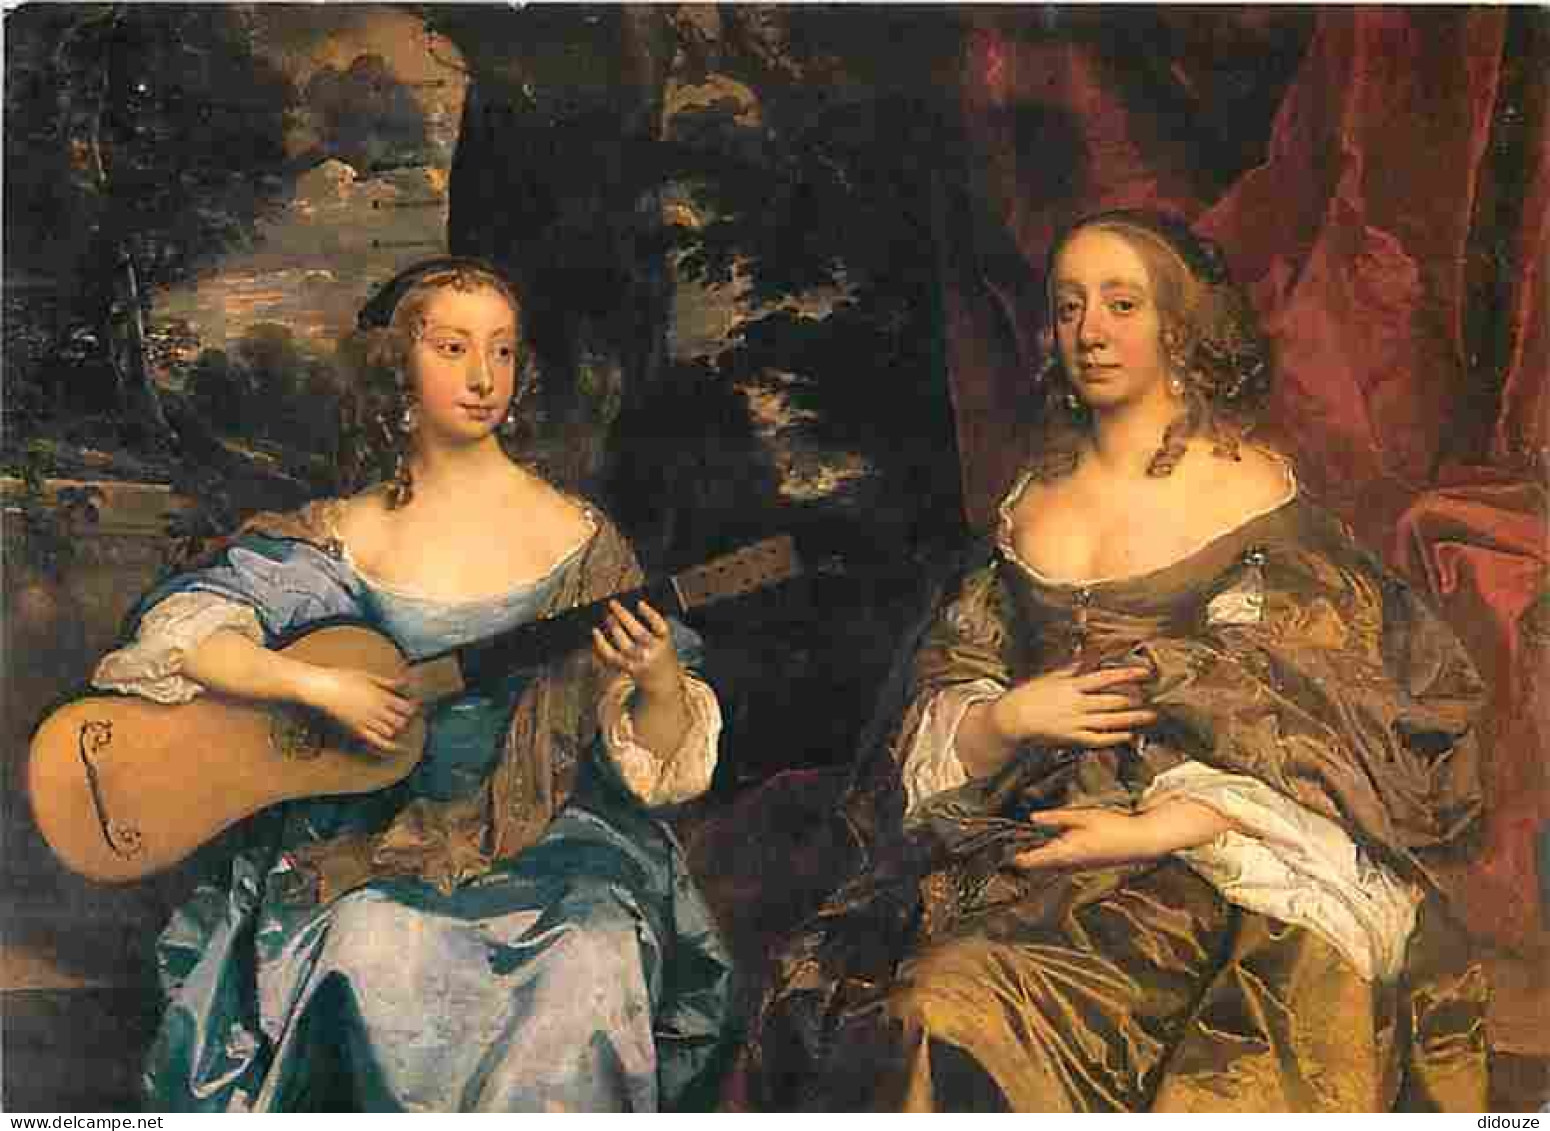 Art - Peinture - Lely Sir Peter - Two Ladies Of The Lake Family - CPM - Voir Scans Recto-Verso - Paintings